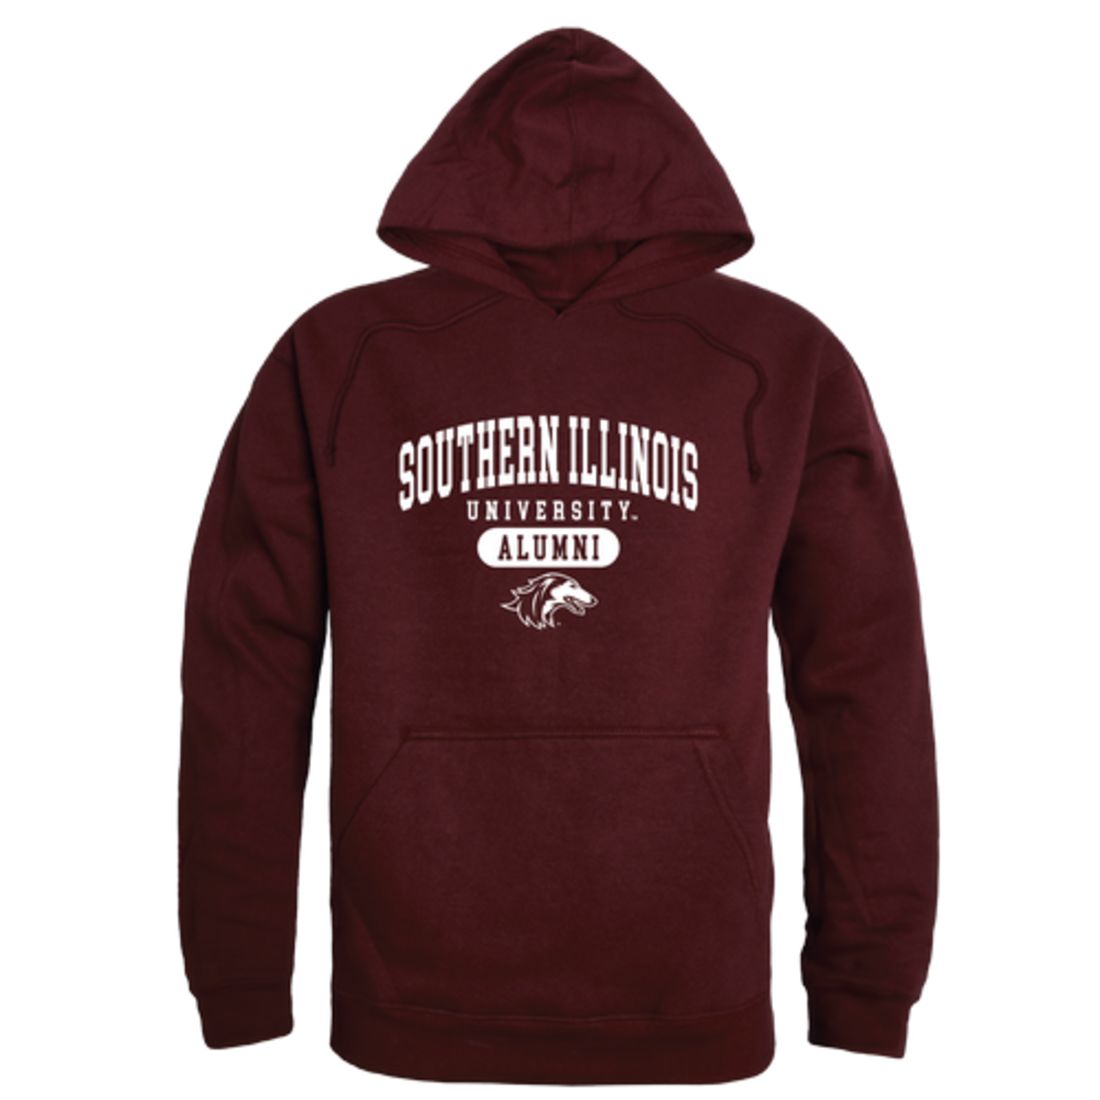 SIU Southern Illinois University Salukis Alumni Fleece Hoodie Sweatshirts Heather Grey-Campus-Wardrobe